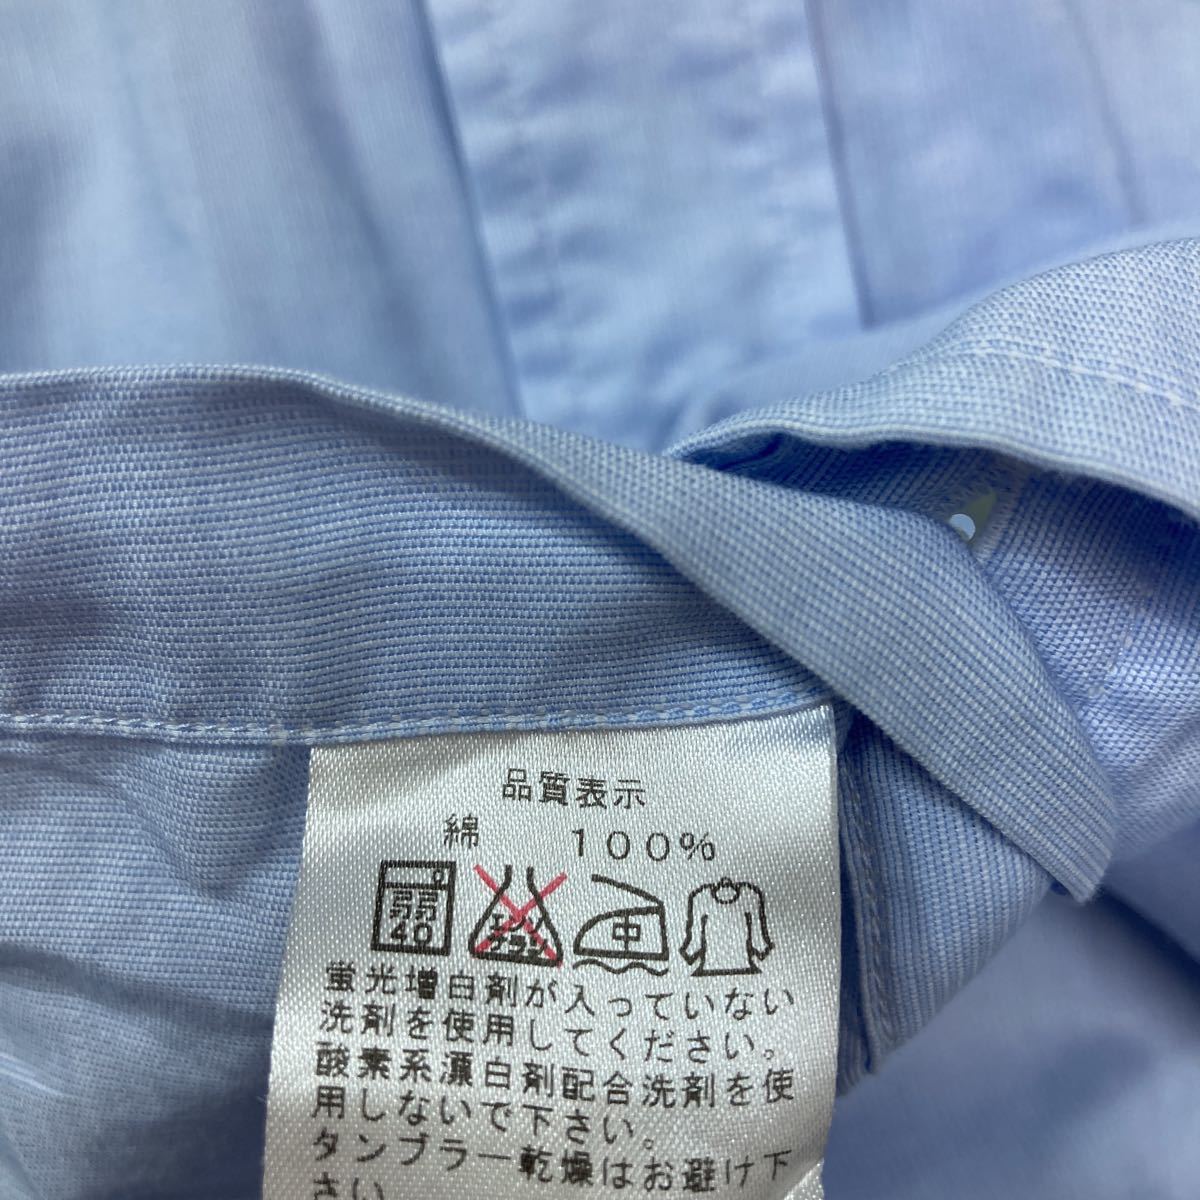 242 Maker's Shirt鎌倉 半袖 ボタンダウンシャツ Xinjiang100 春夏 オフィス カジュアル ワイシャツ 日本製 メンズ サイズM 30718Lの画像4